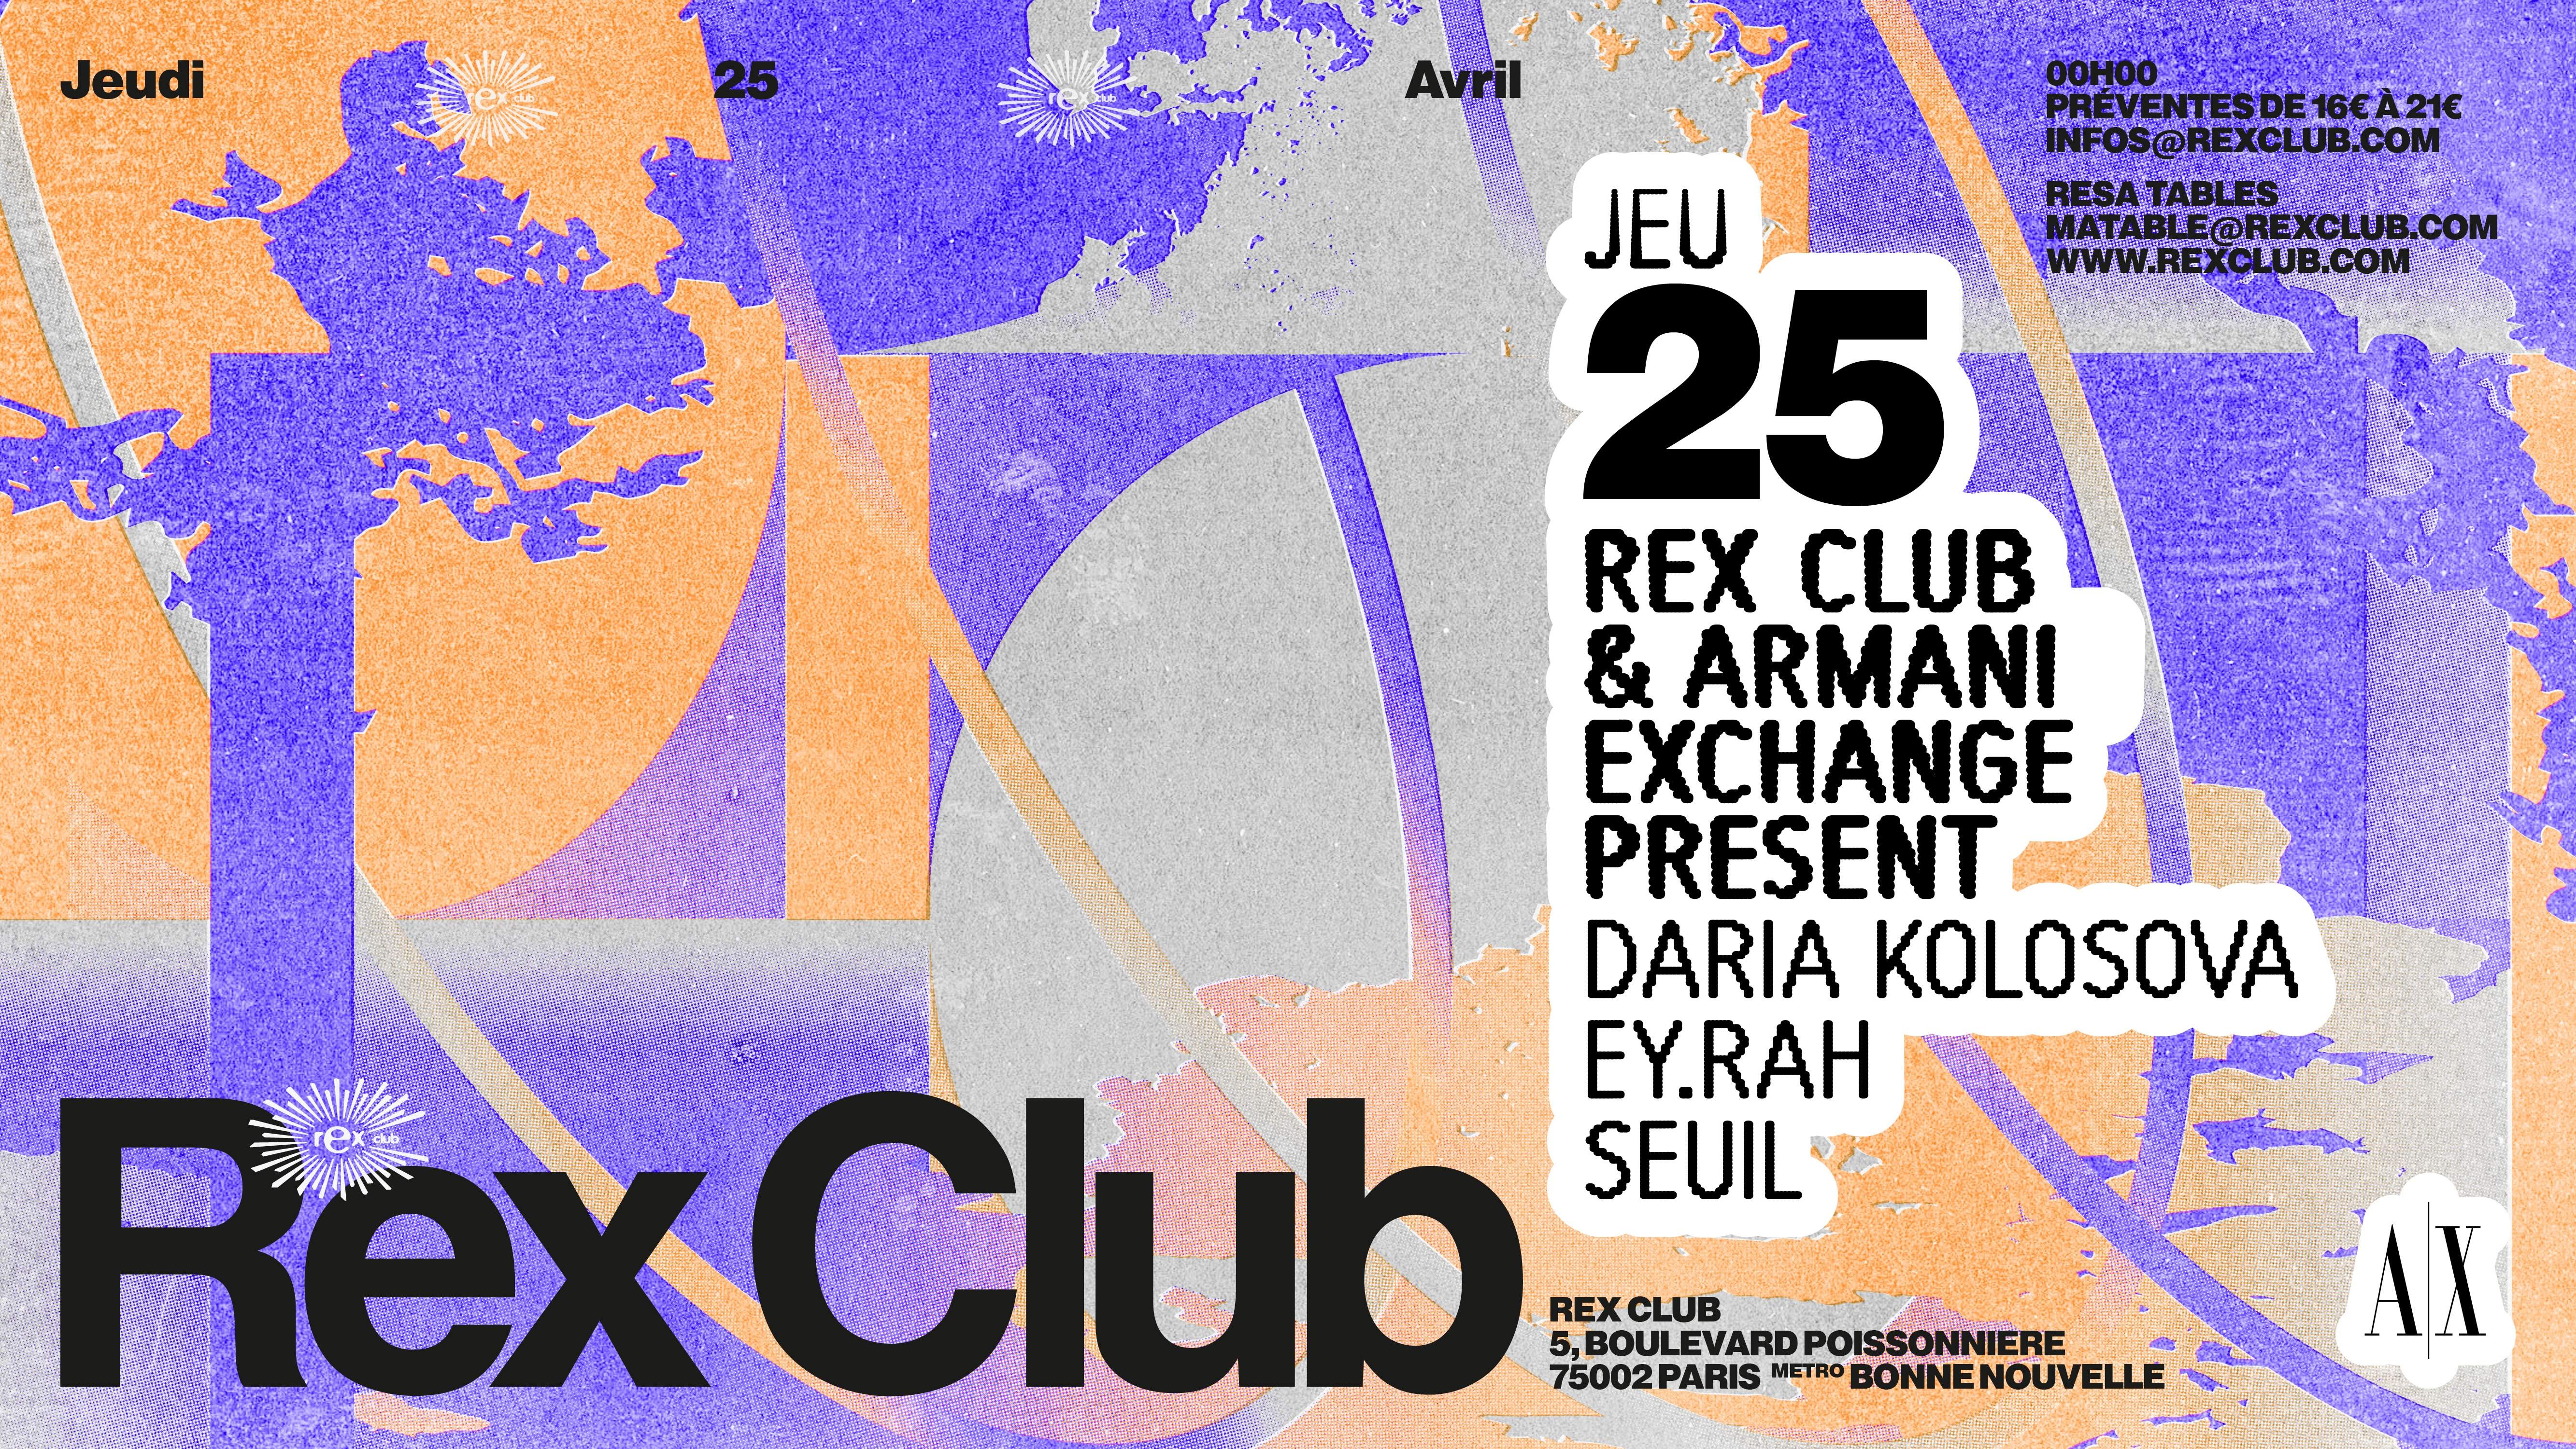 Rex Club & Armani Exchange present: Daria Kolosova, Ey.rah, Seuil - Página frontal